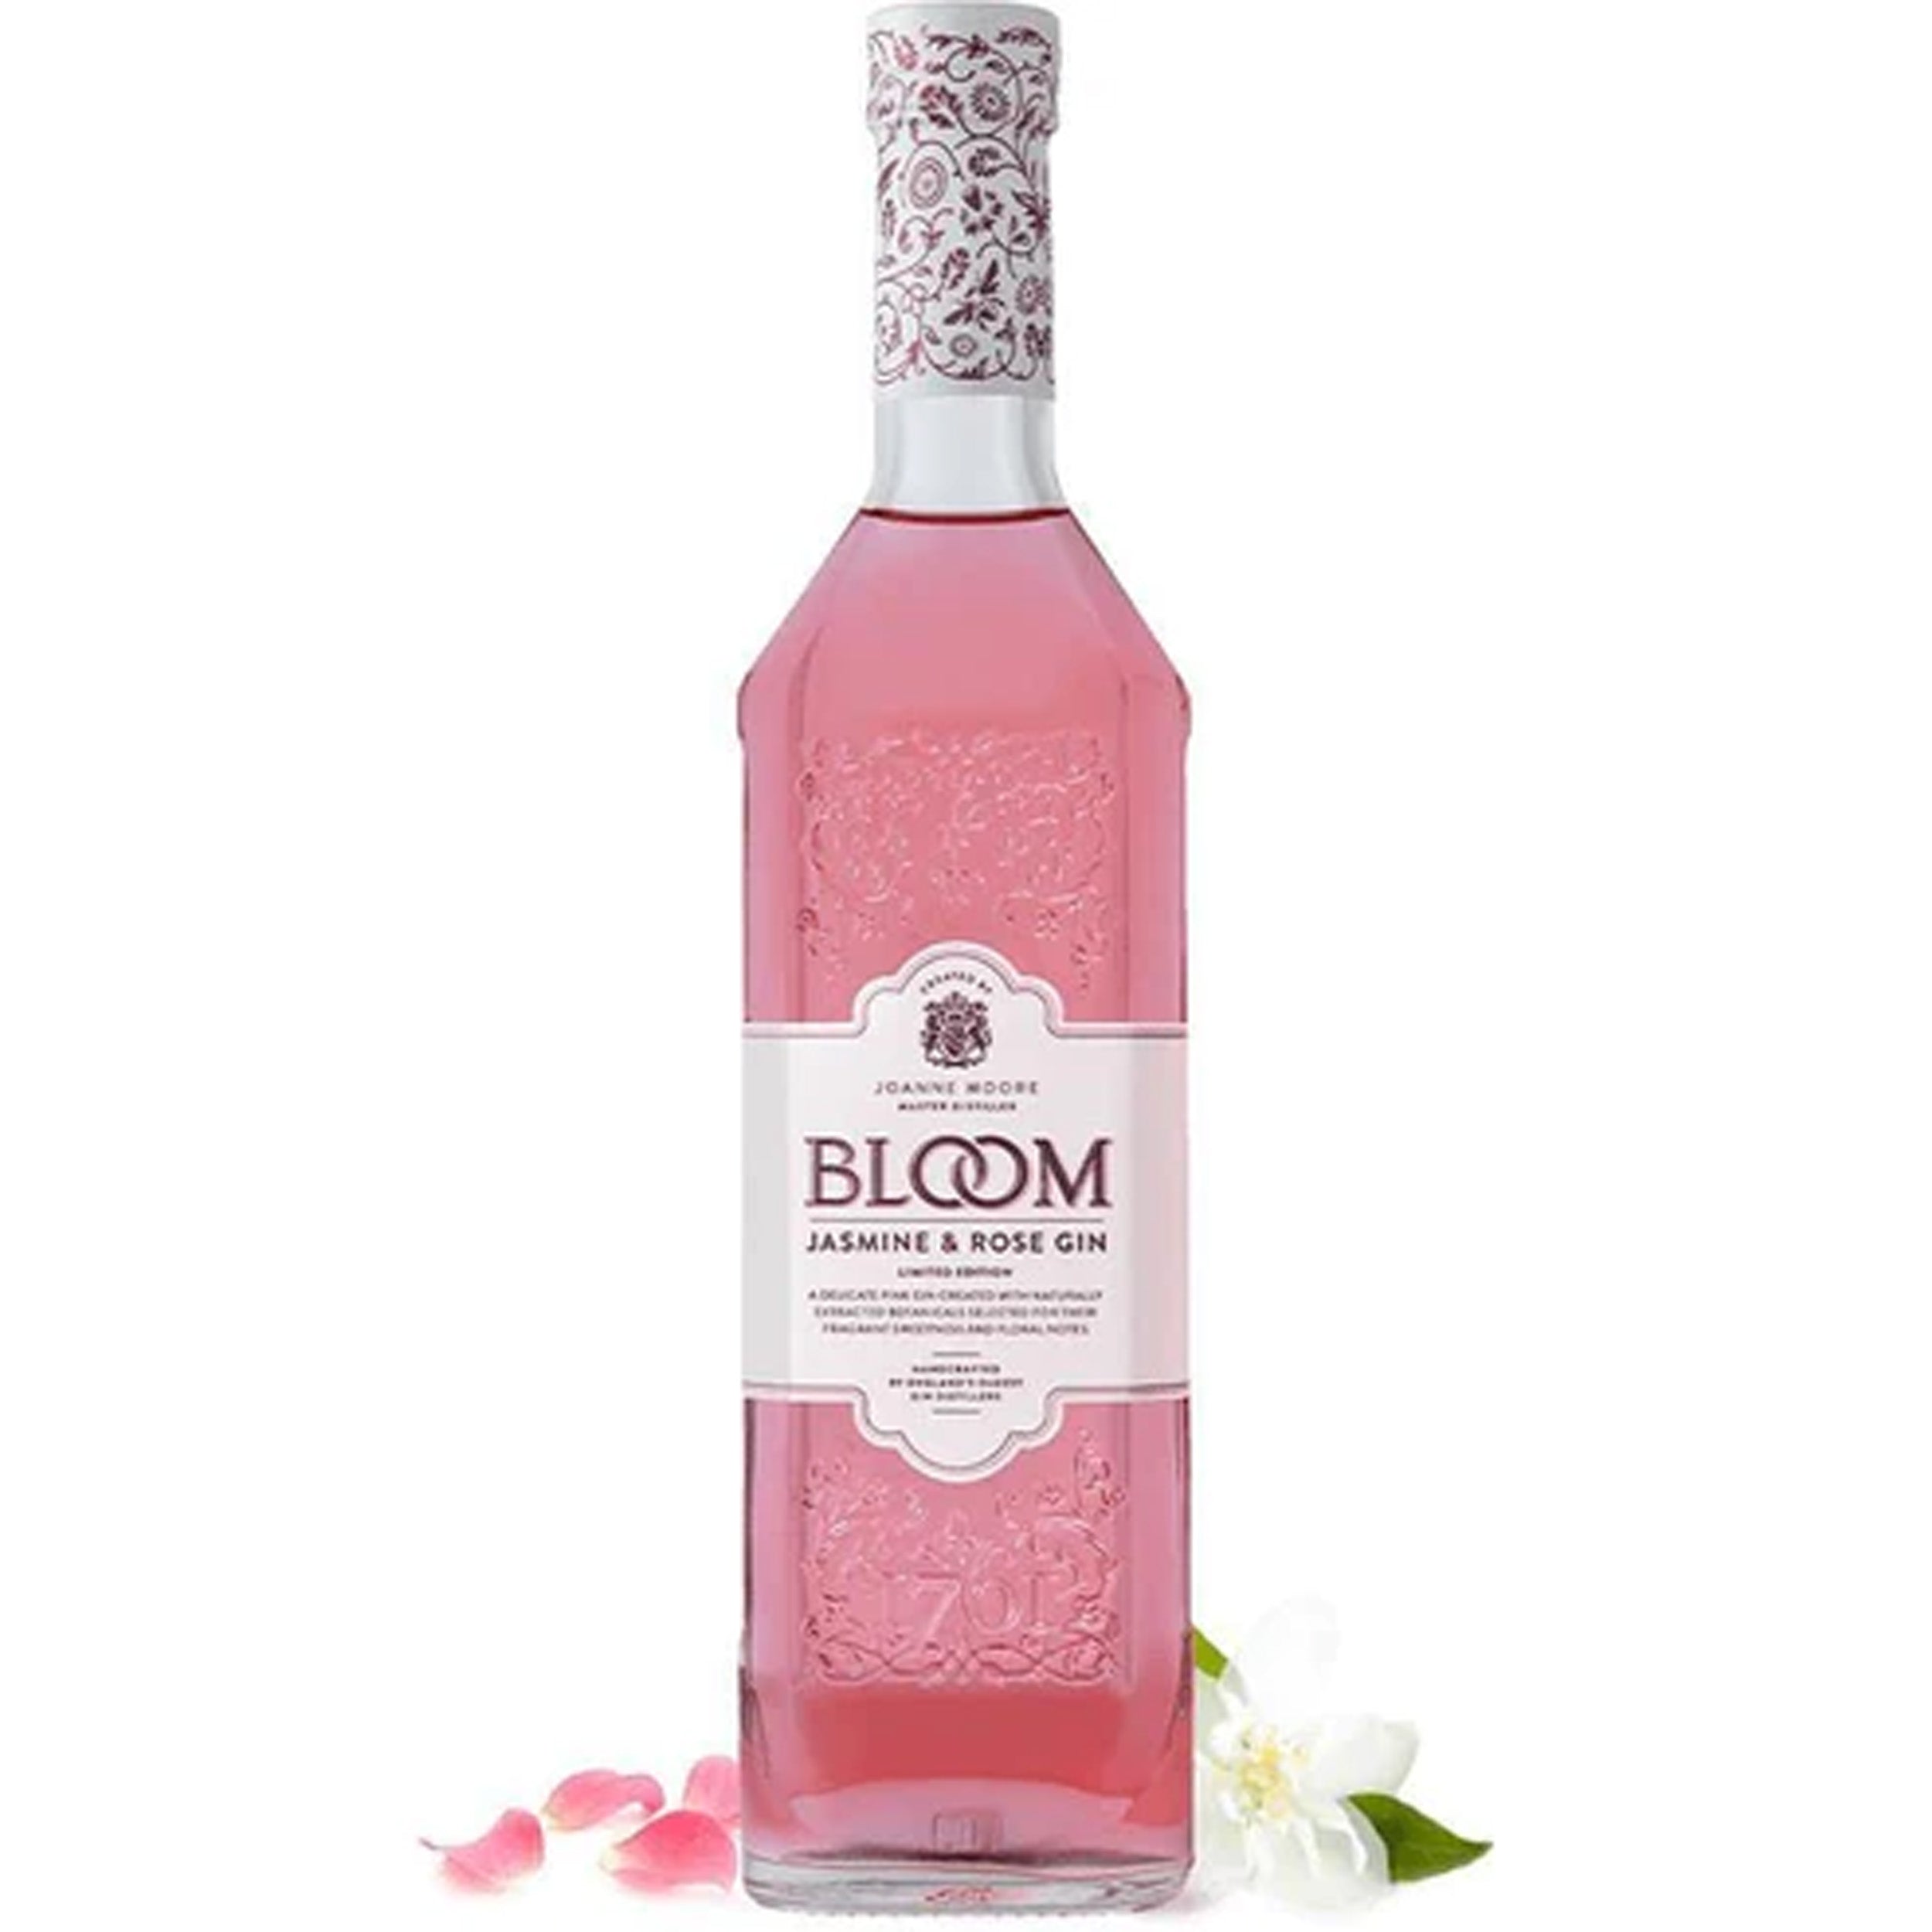 – Bloom Jasmine Gin Rose Chips and Liquor